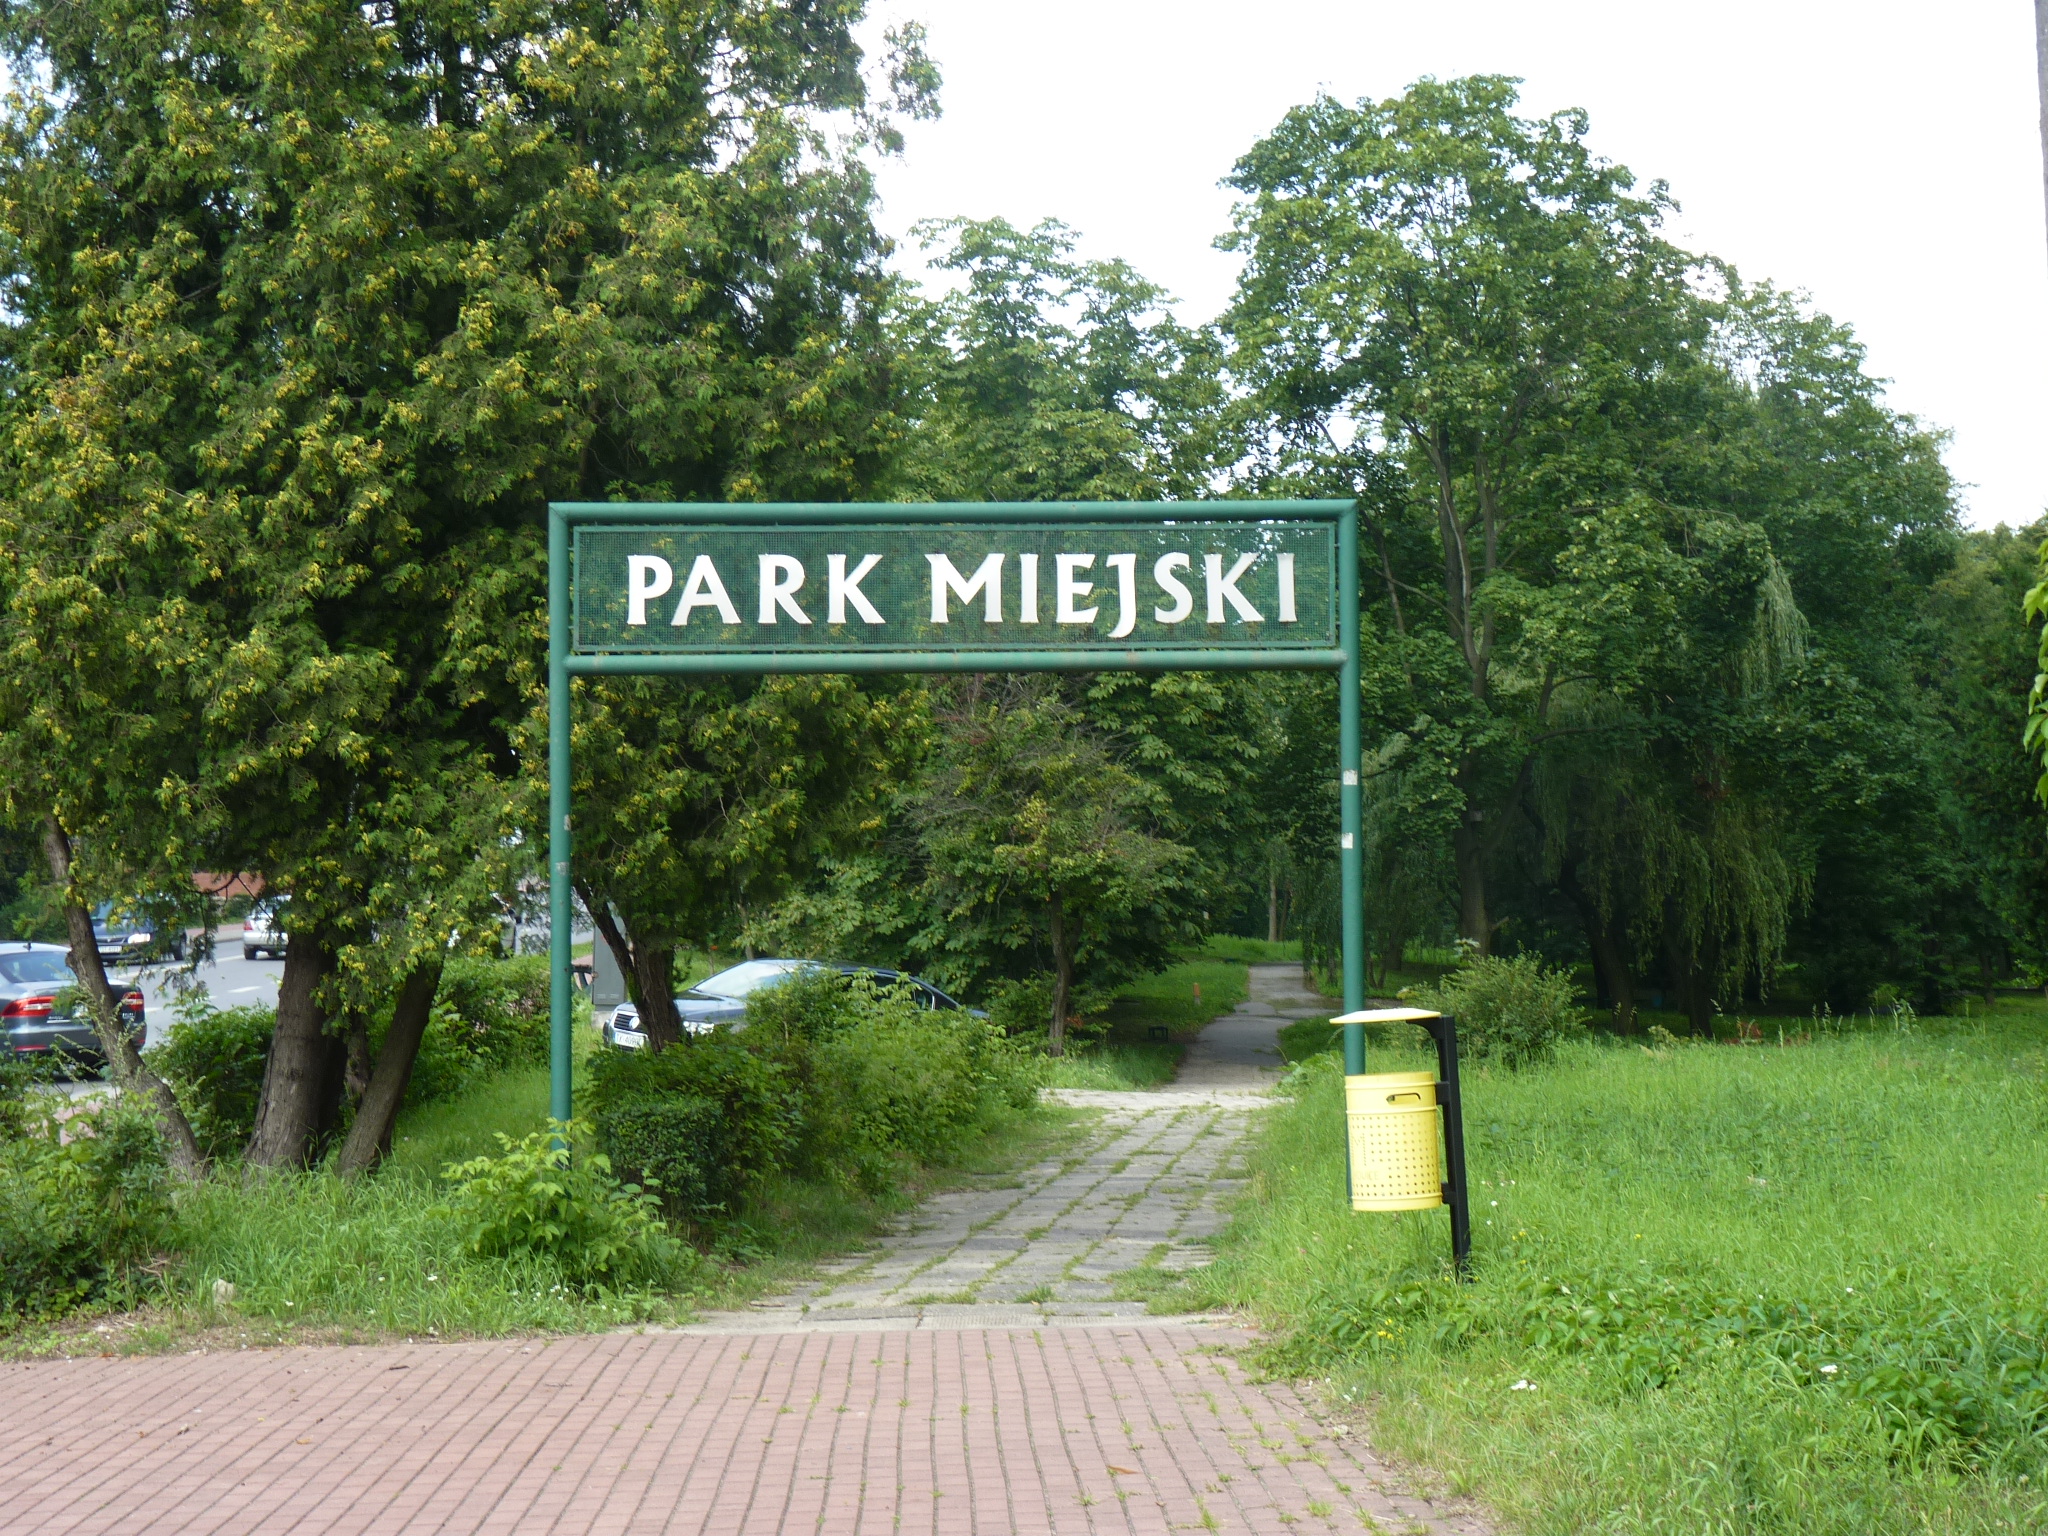 Park Miejski images